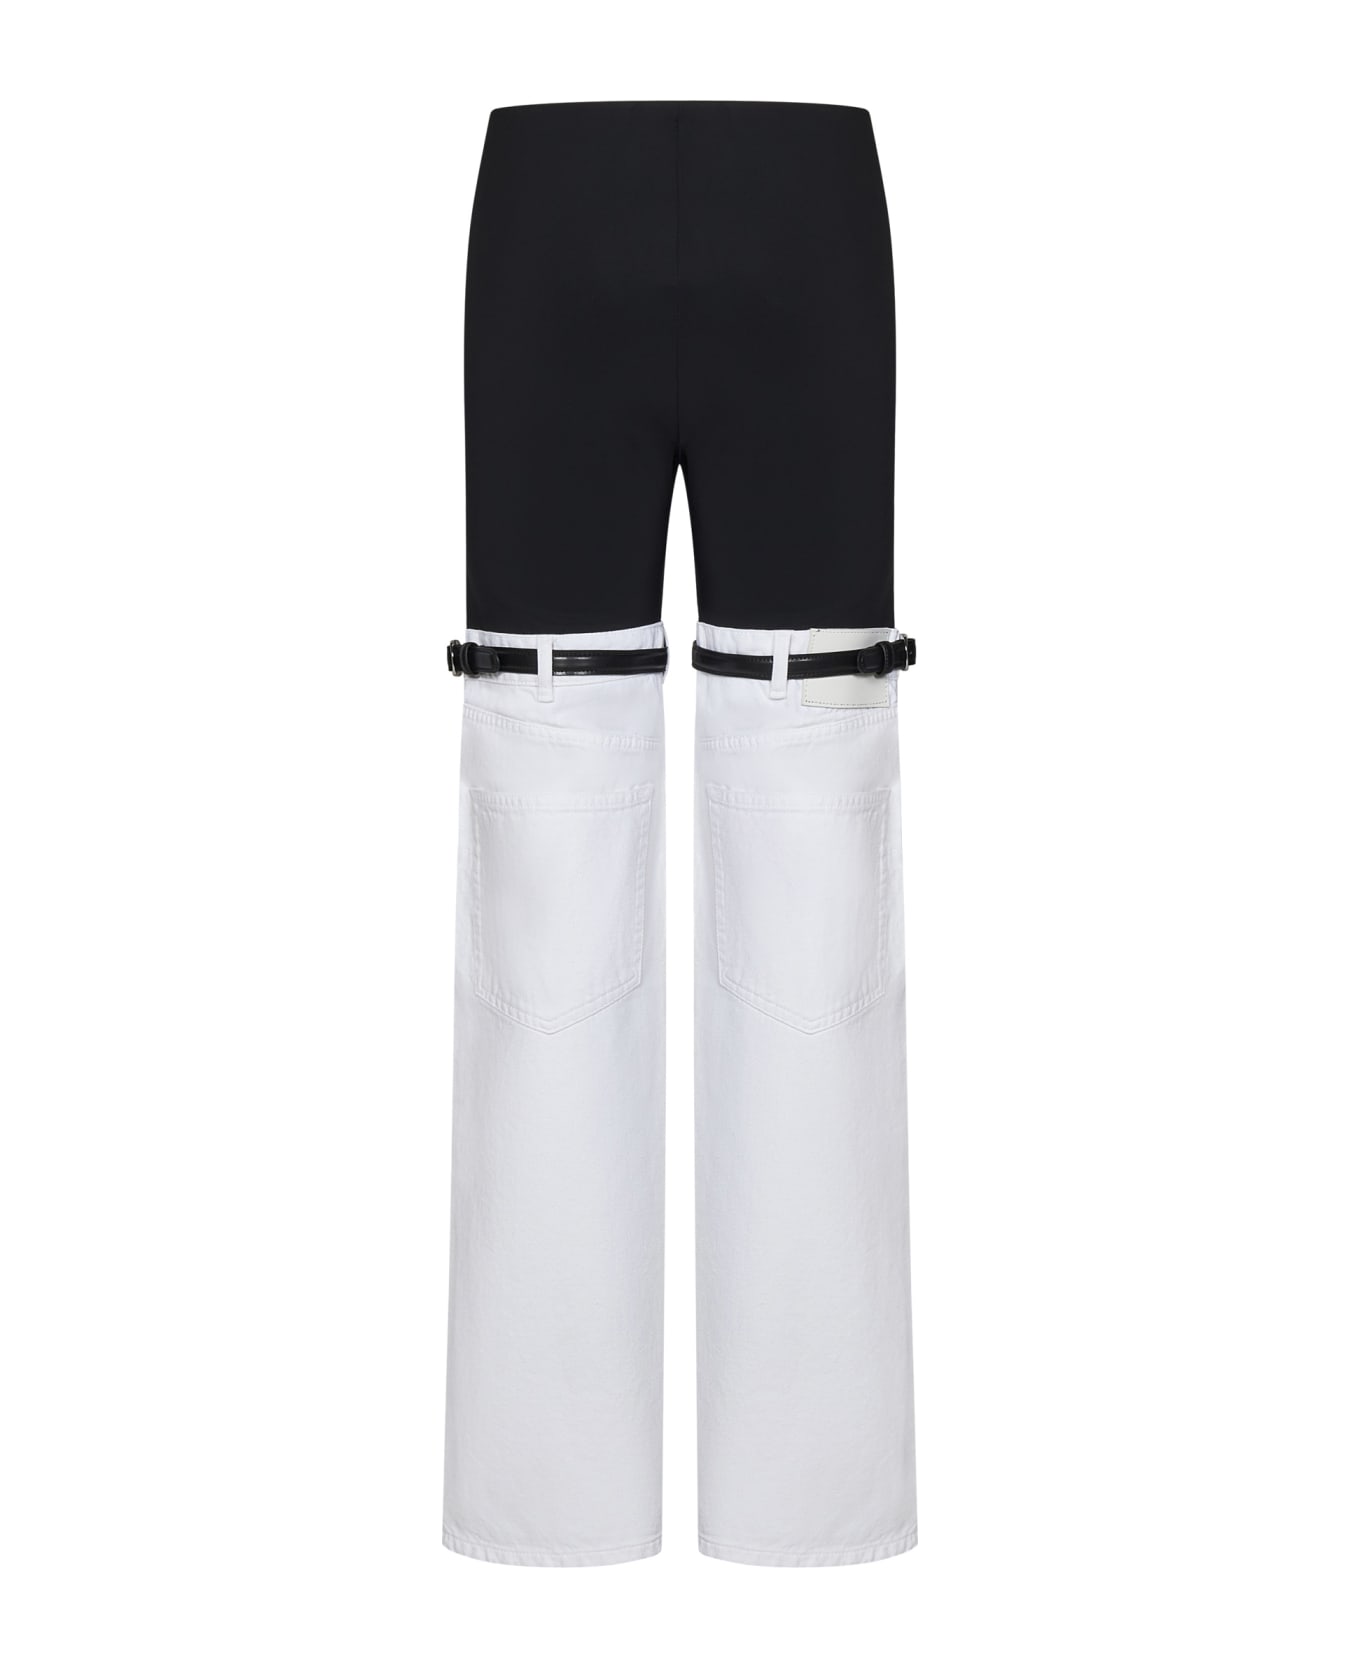 Coperni Hybrid Trousers - BLACK/WHITE ボトムス